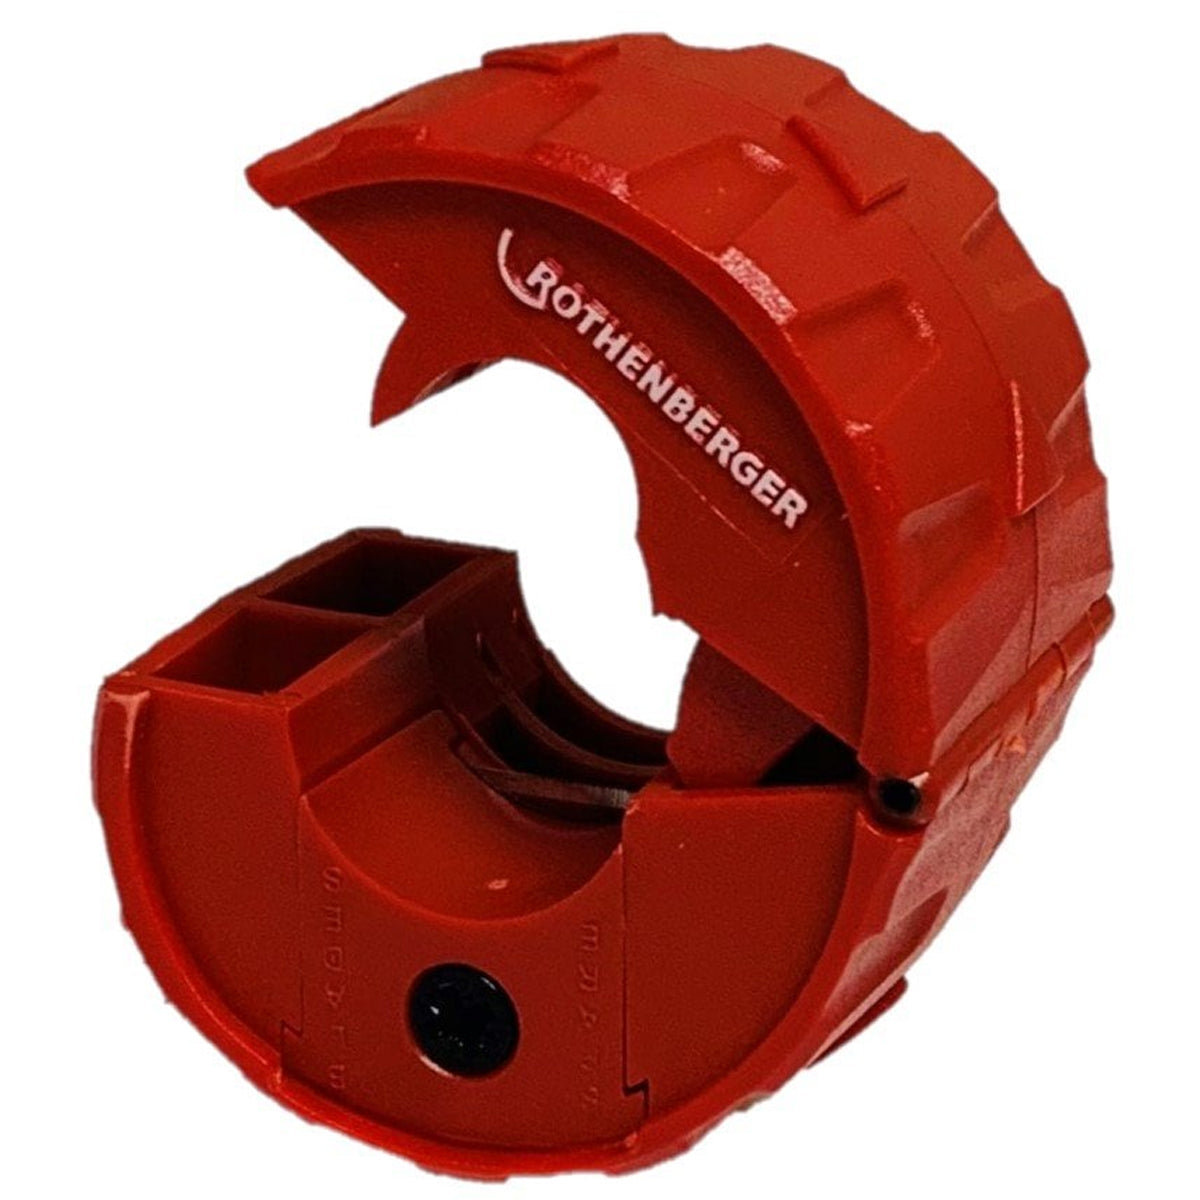 Rothenberger Plasticut Pro Pipe Cutter 15-22mm 1000003041